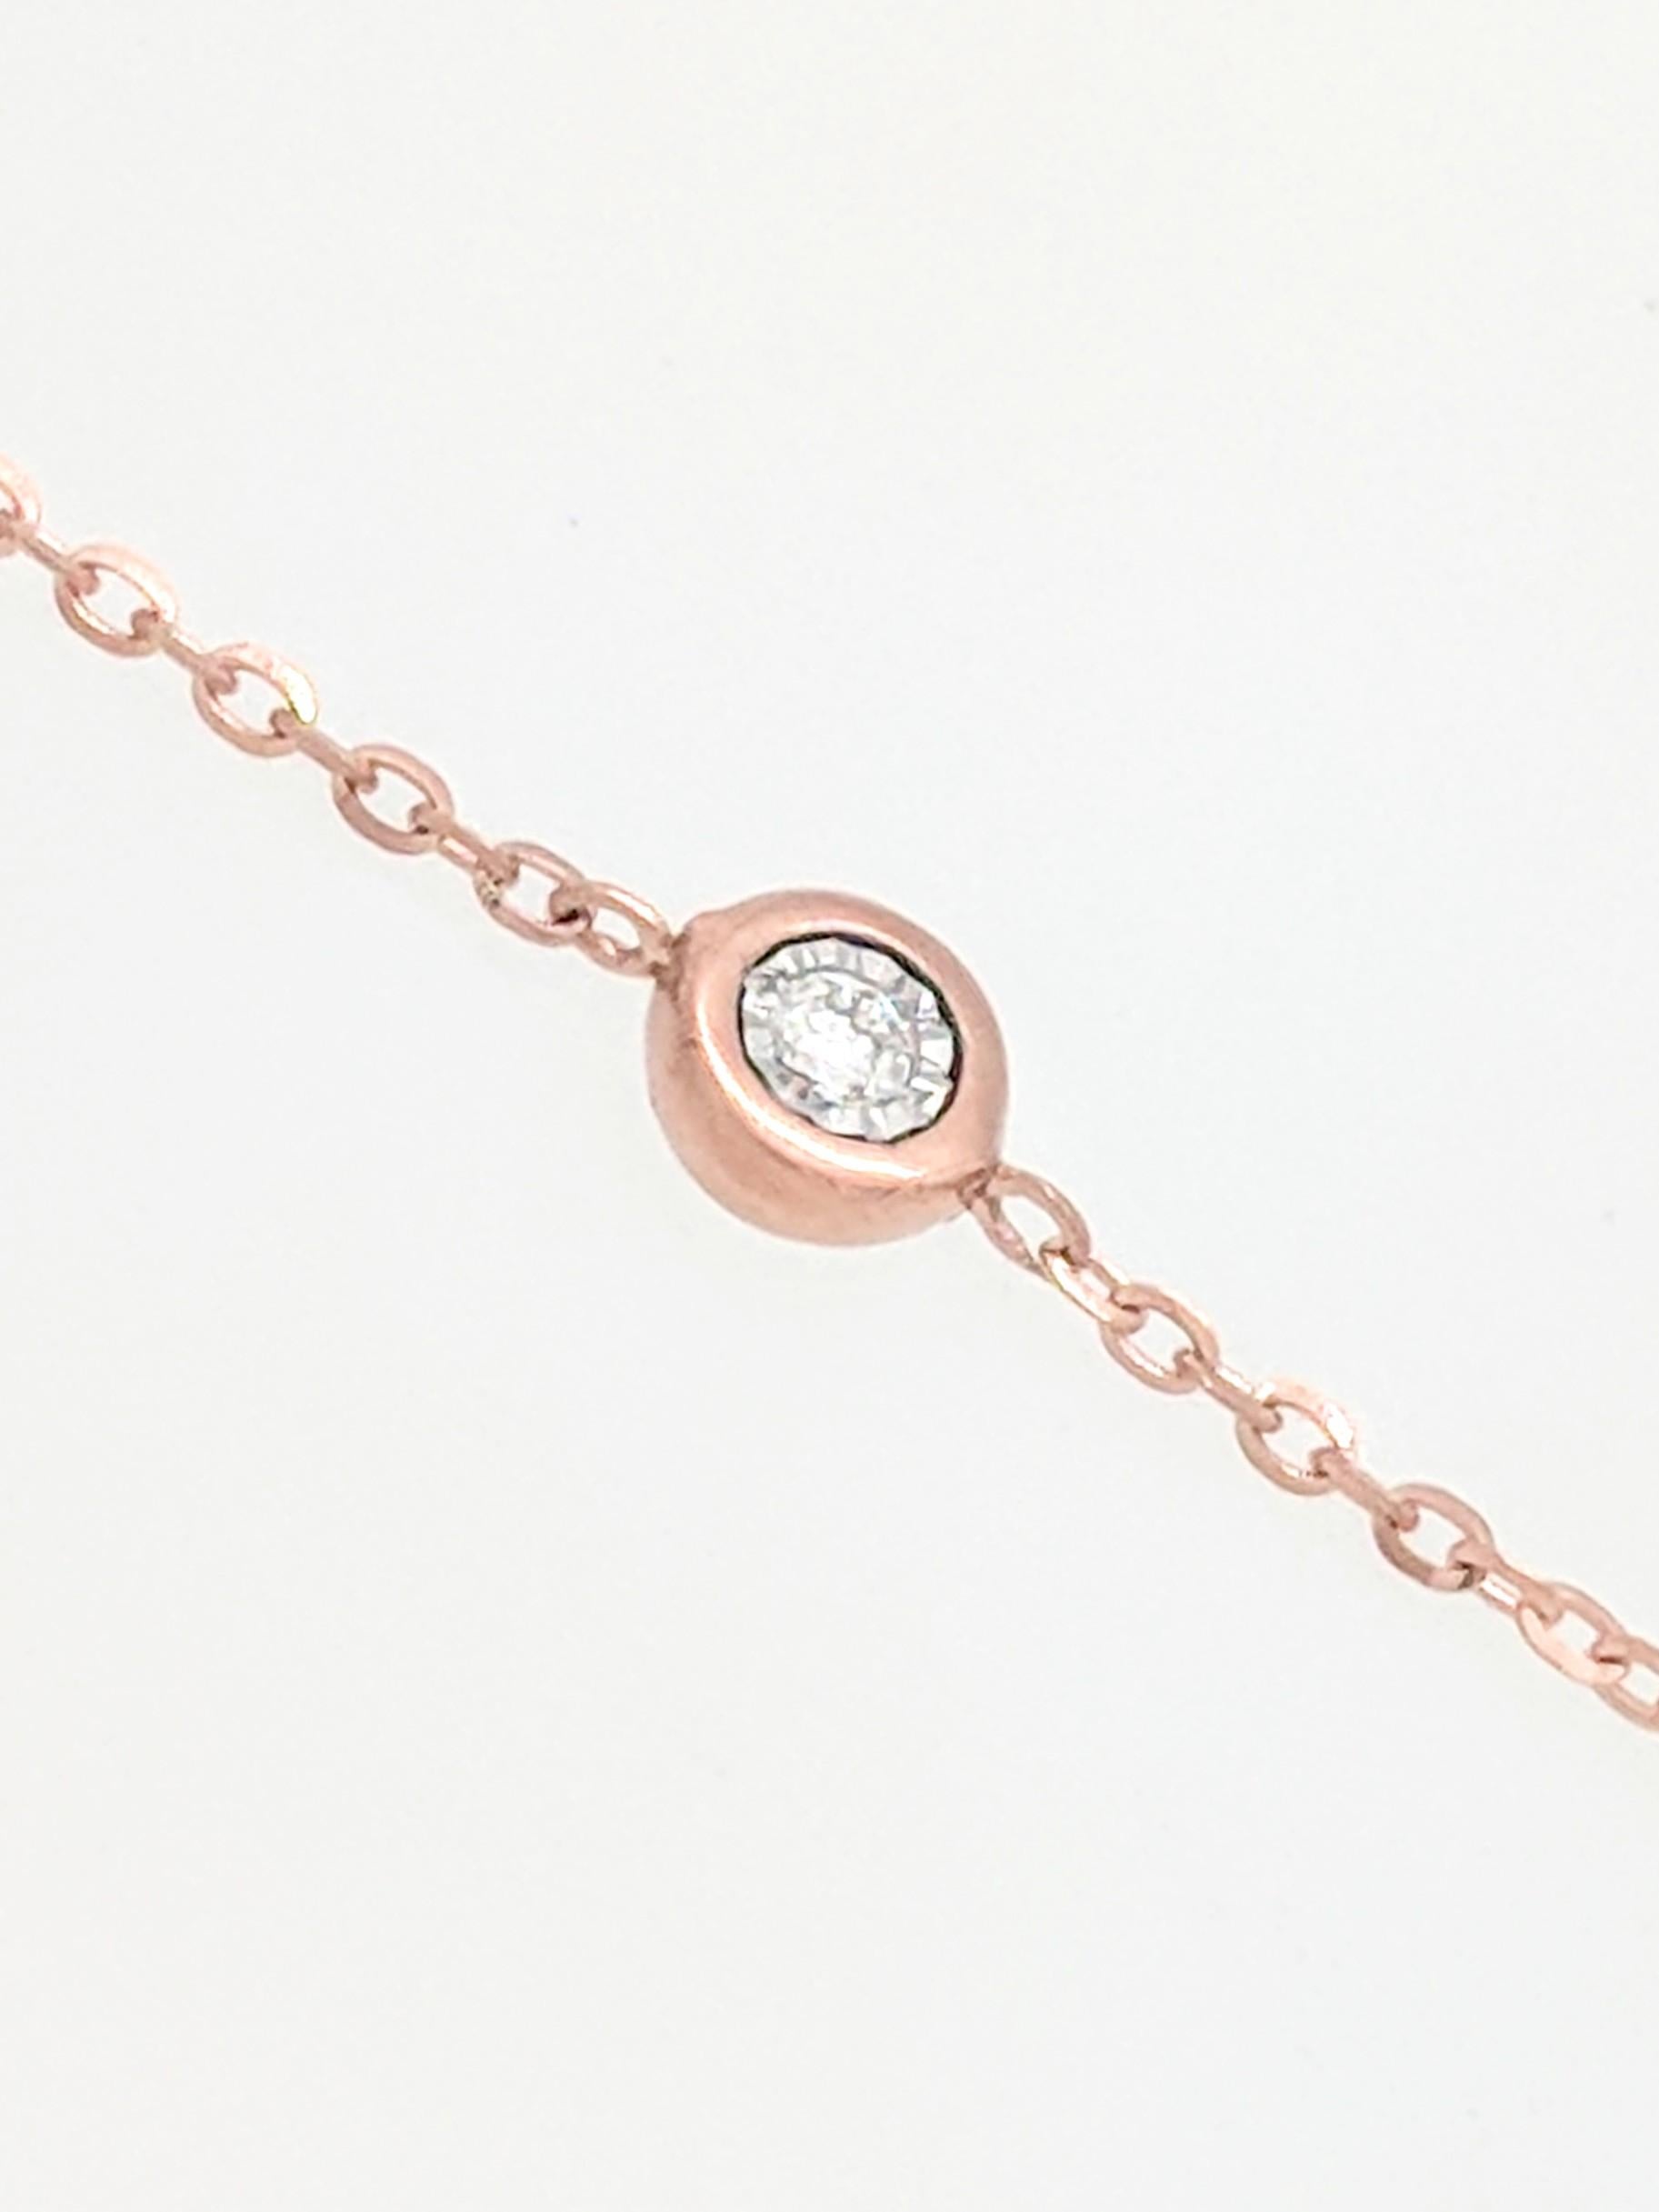 Women's 14 Karat Rose Gold Diamond by The Yard Necklace .19 Carat